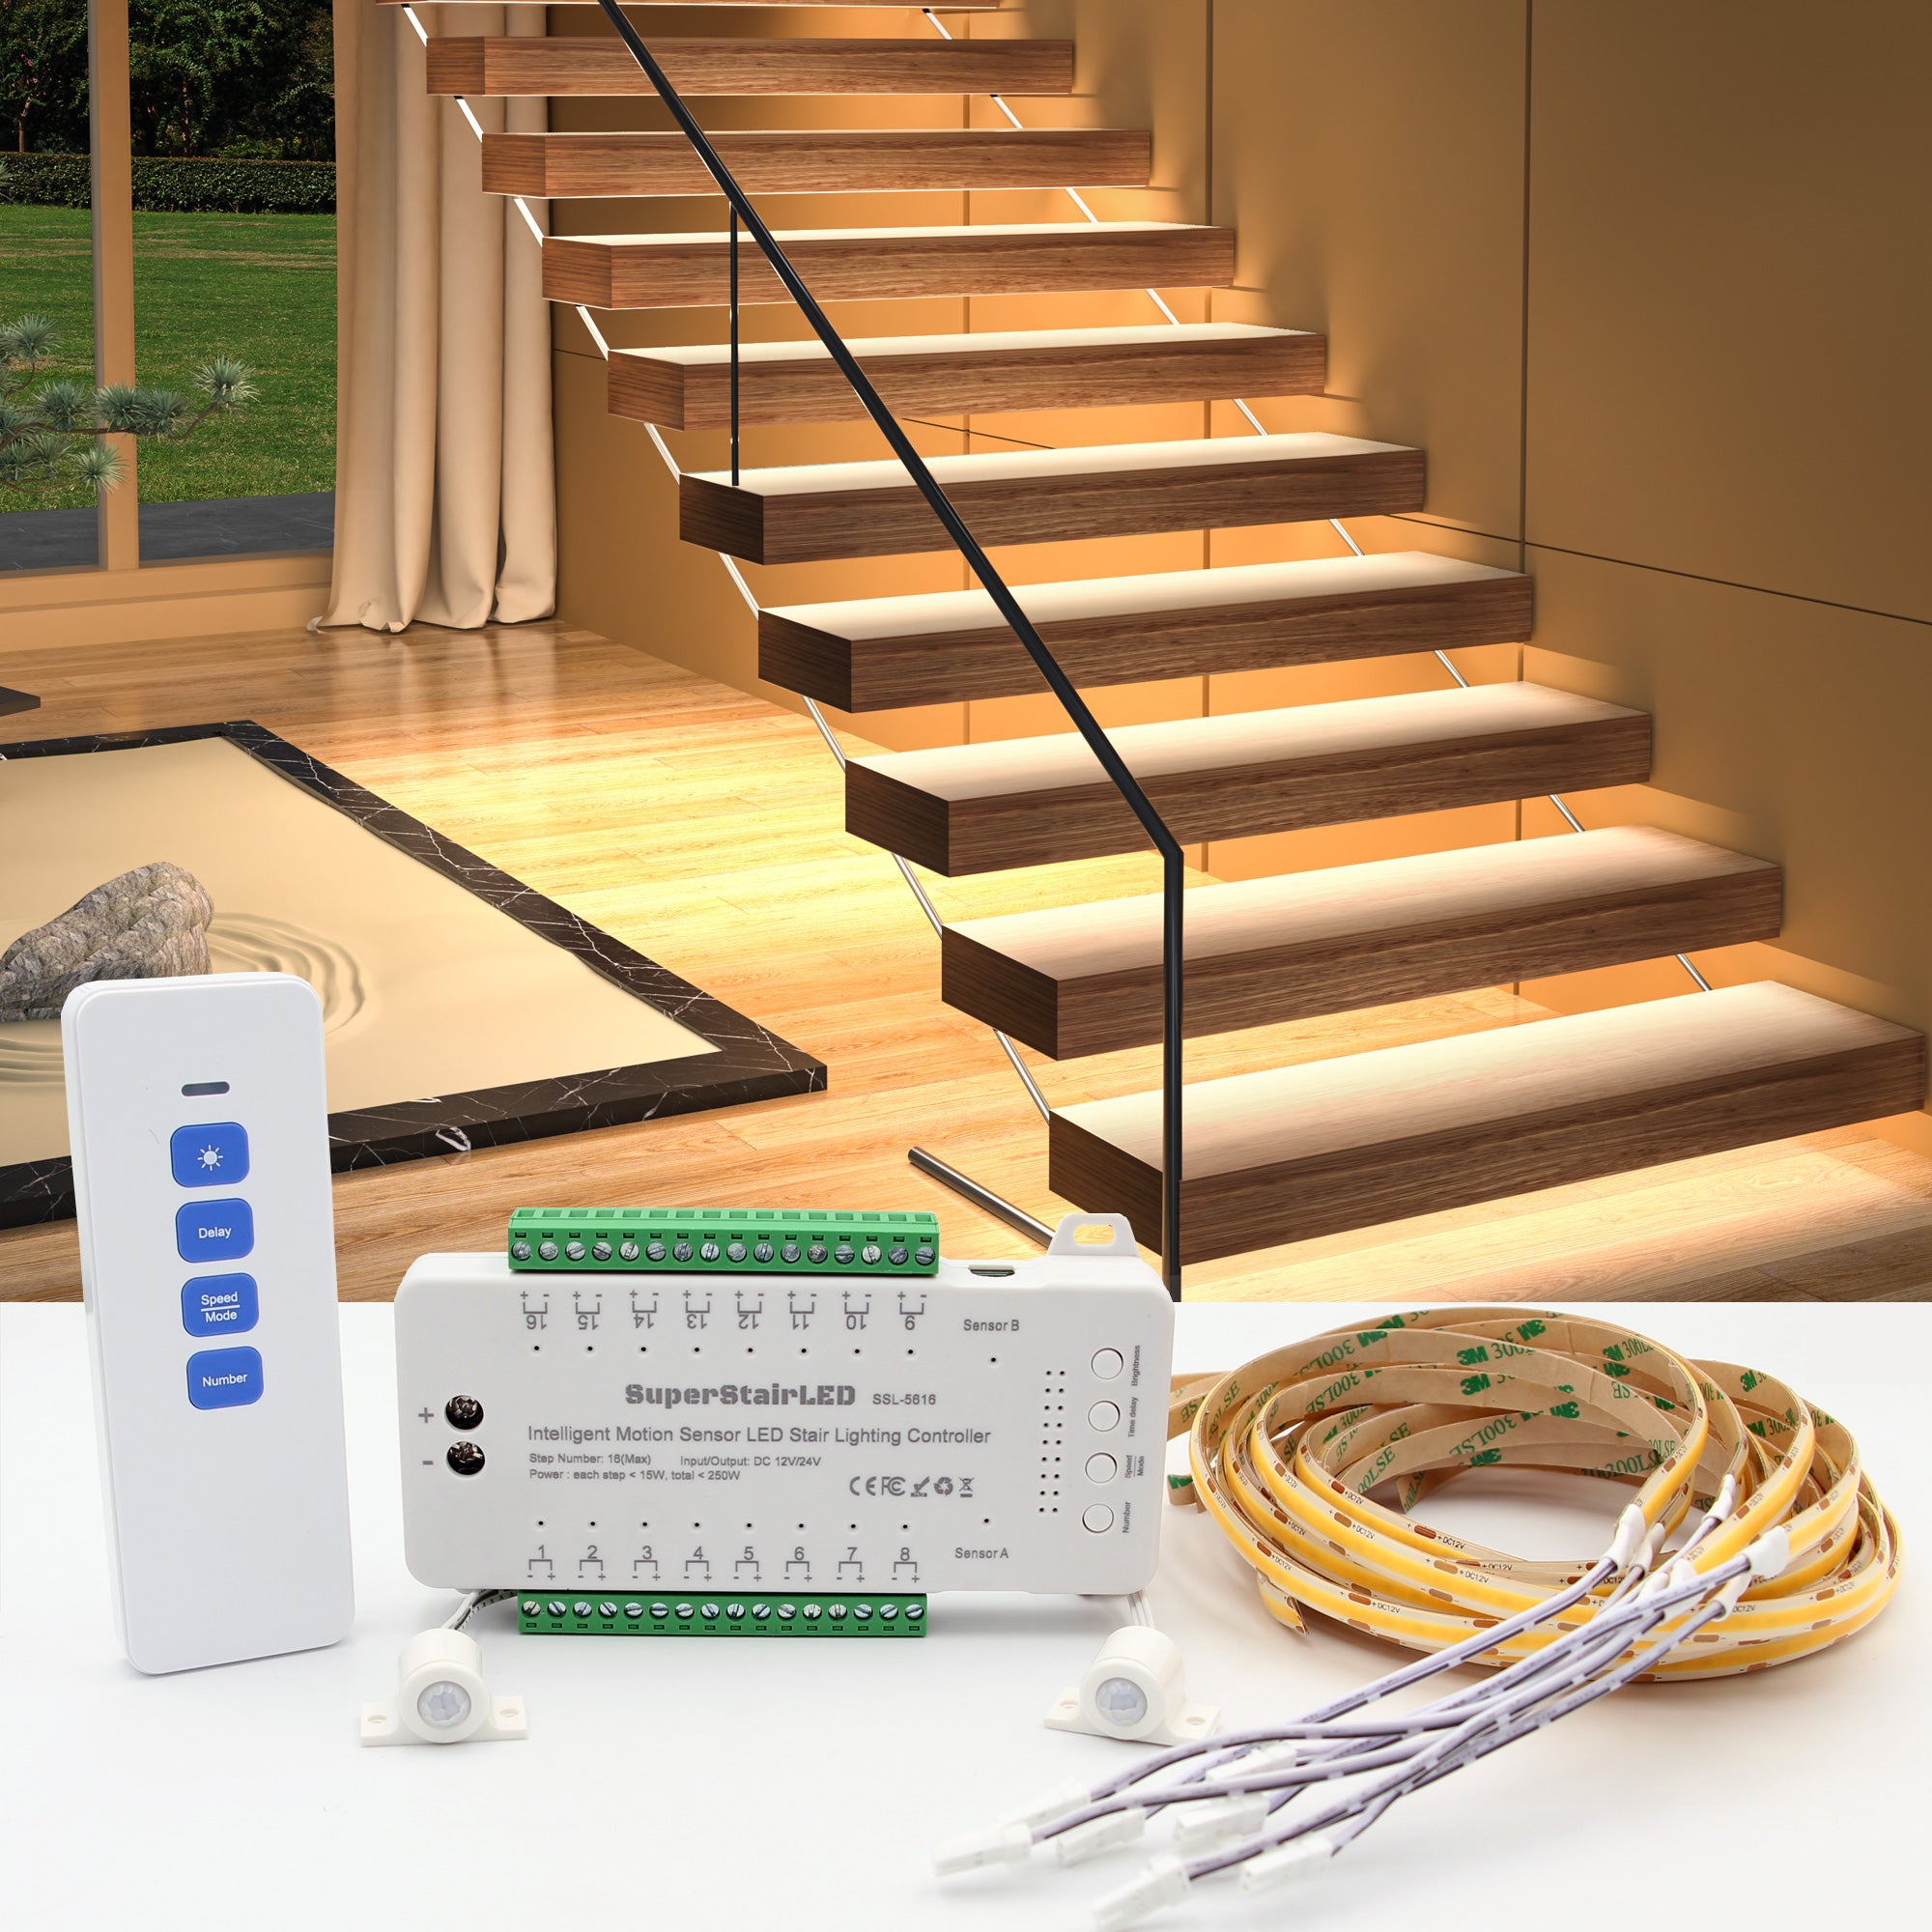 SuperStairLED Intelligent Motion Sensor LED Stair Lighting Complete Set SSL-5616, 40 Inches Long Cuttable LED Strip Light for Indoor LED Stair Lights LED Step Lights